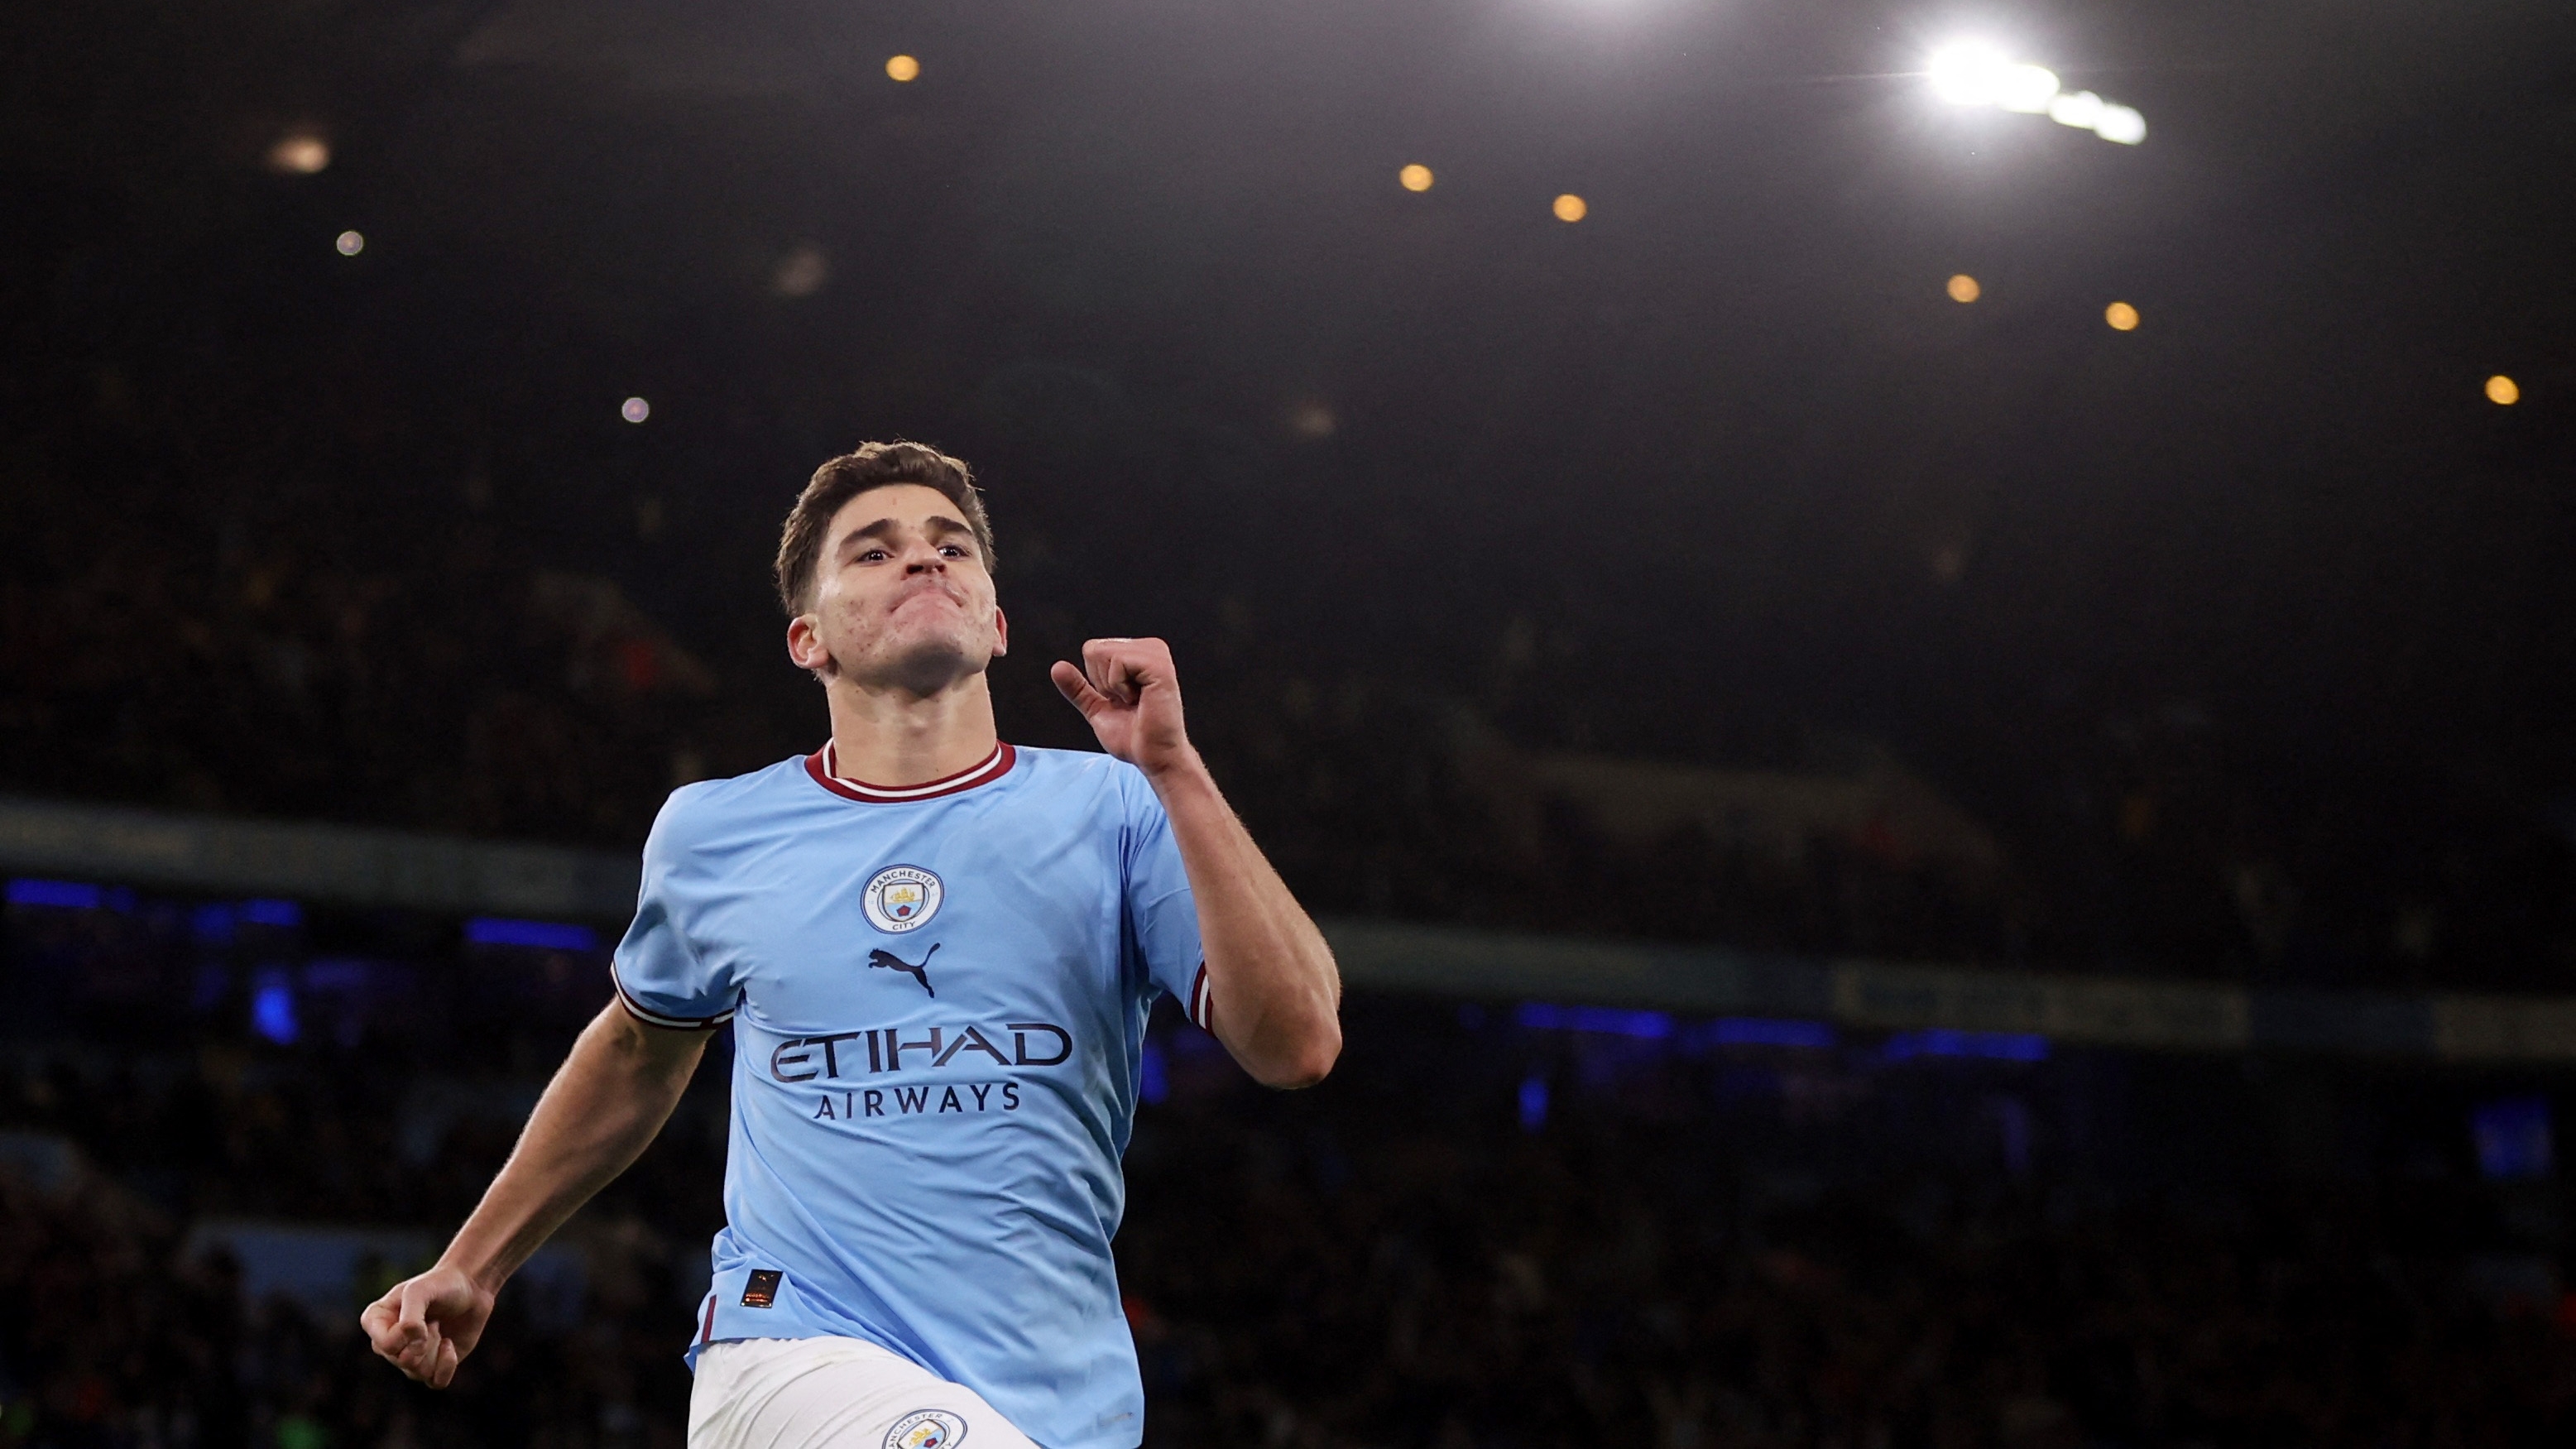 Julián Álvarez celebrates his goal that led City's comeback (Reuters / Lee Smith)